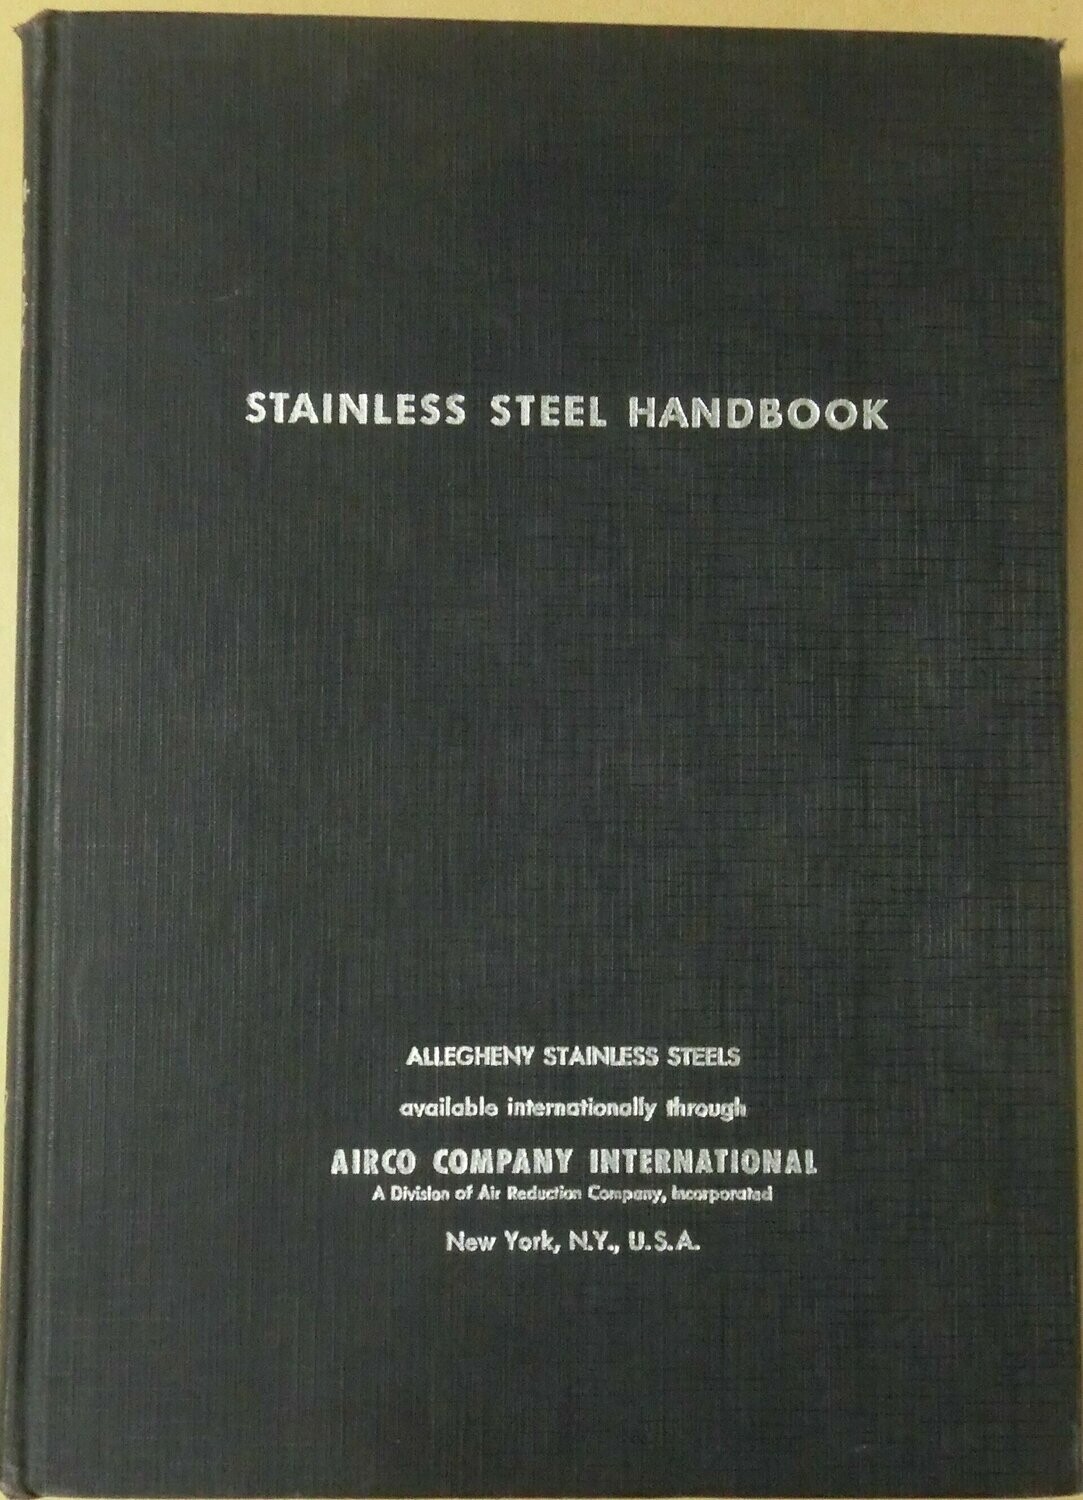 Stainless steel handbook